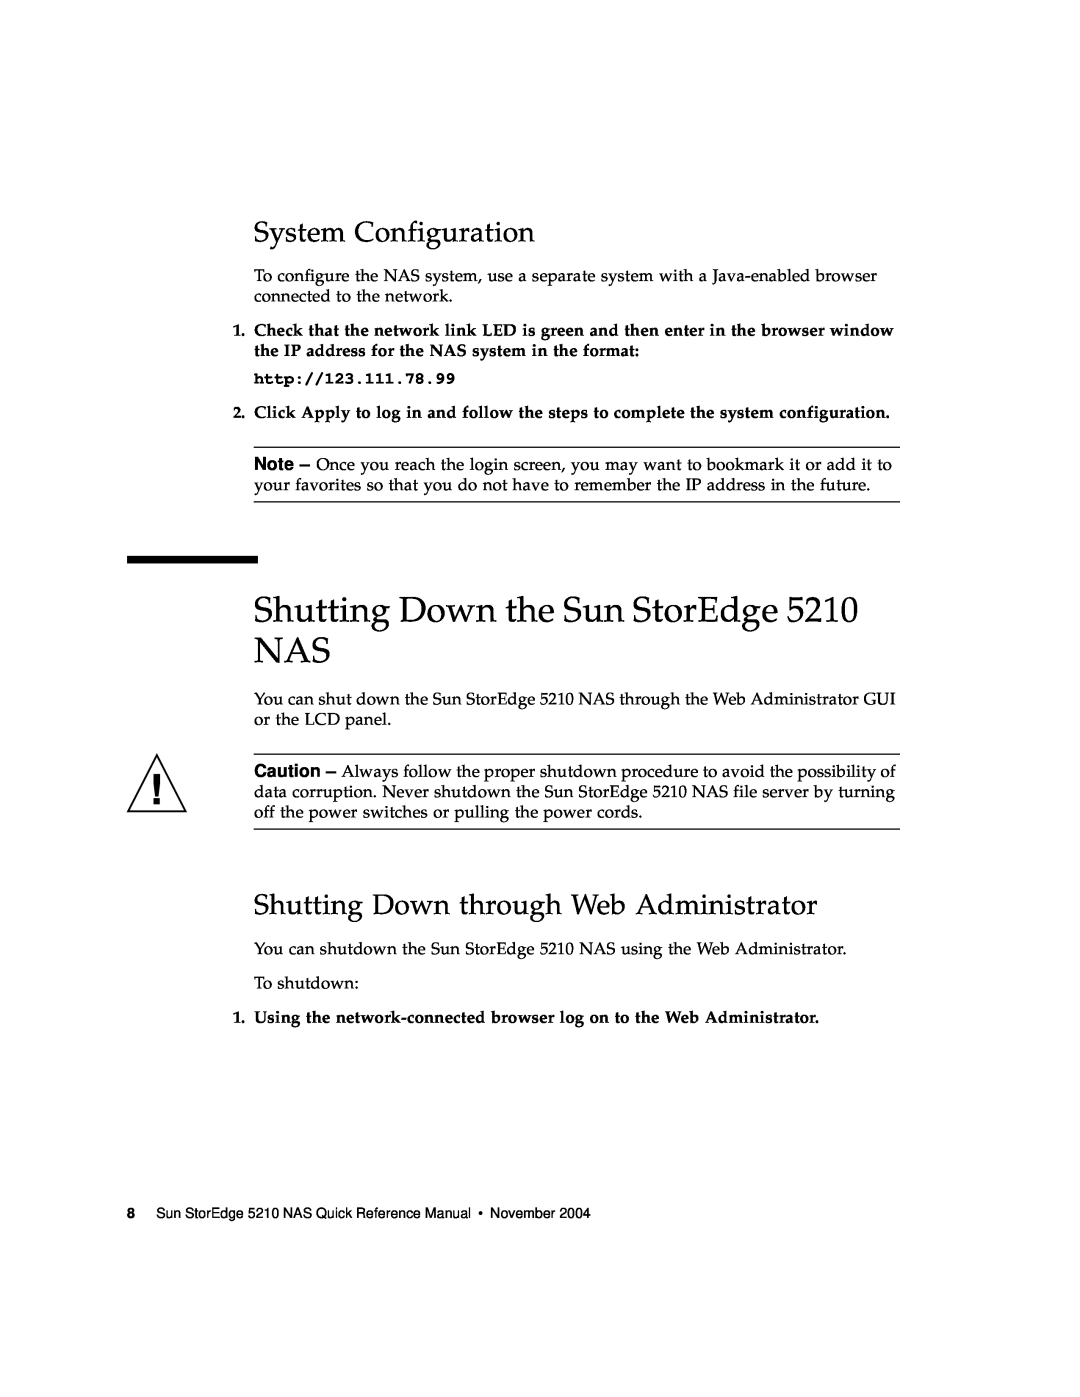 Sun Microsystems 5210 NAS manual Shutting Down the Sun StorEdge NAS, System Configuration, http//123.111.78.99 